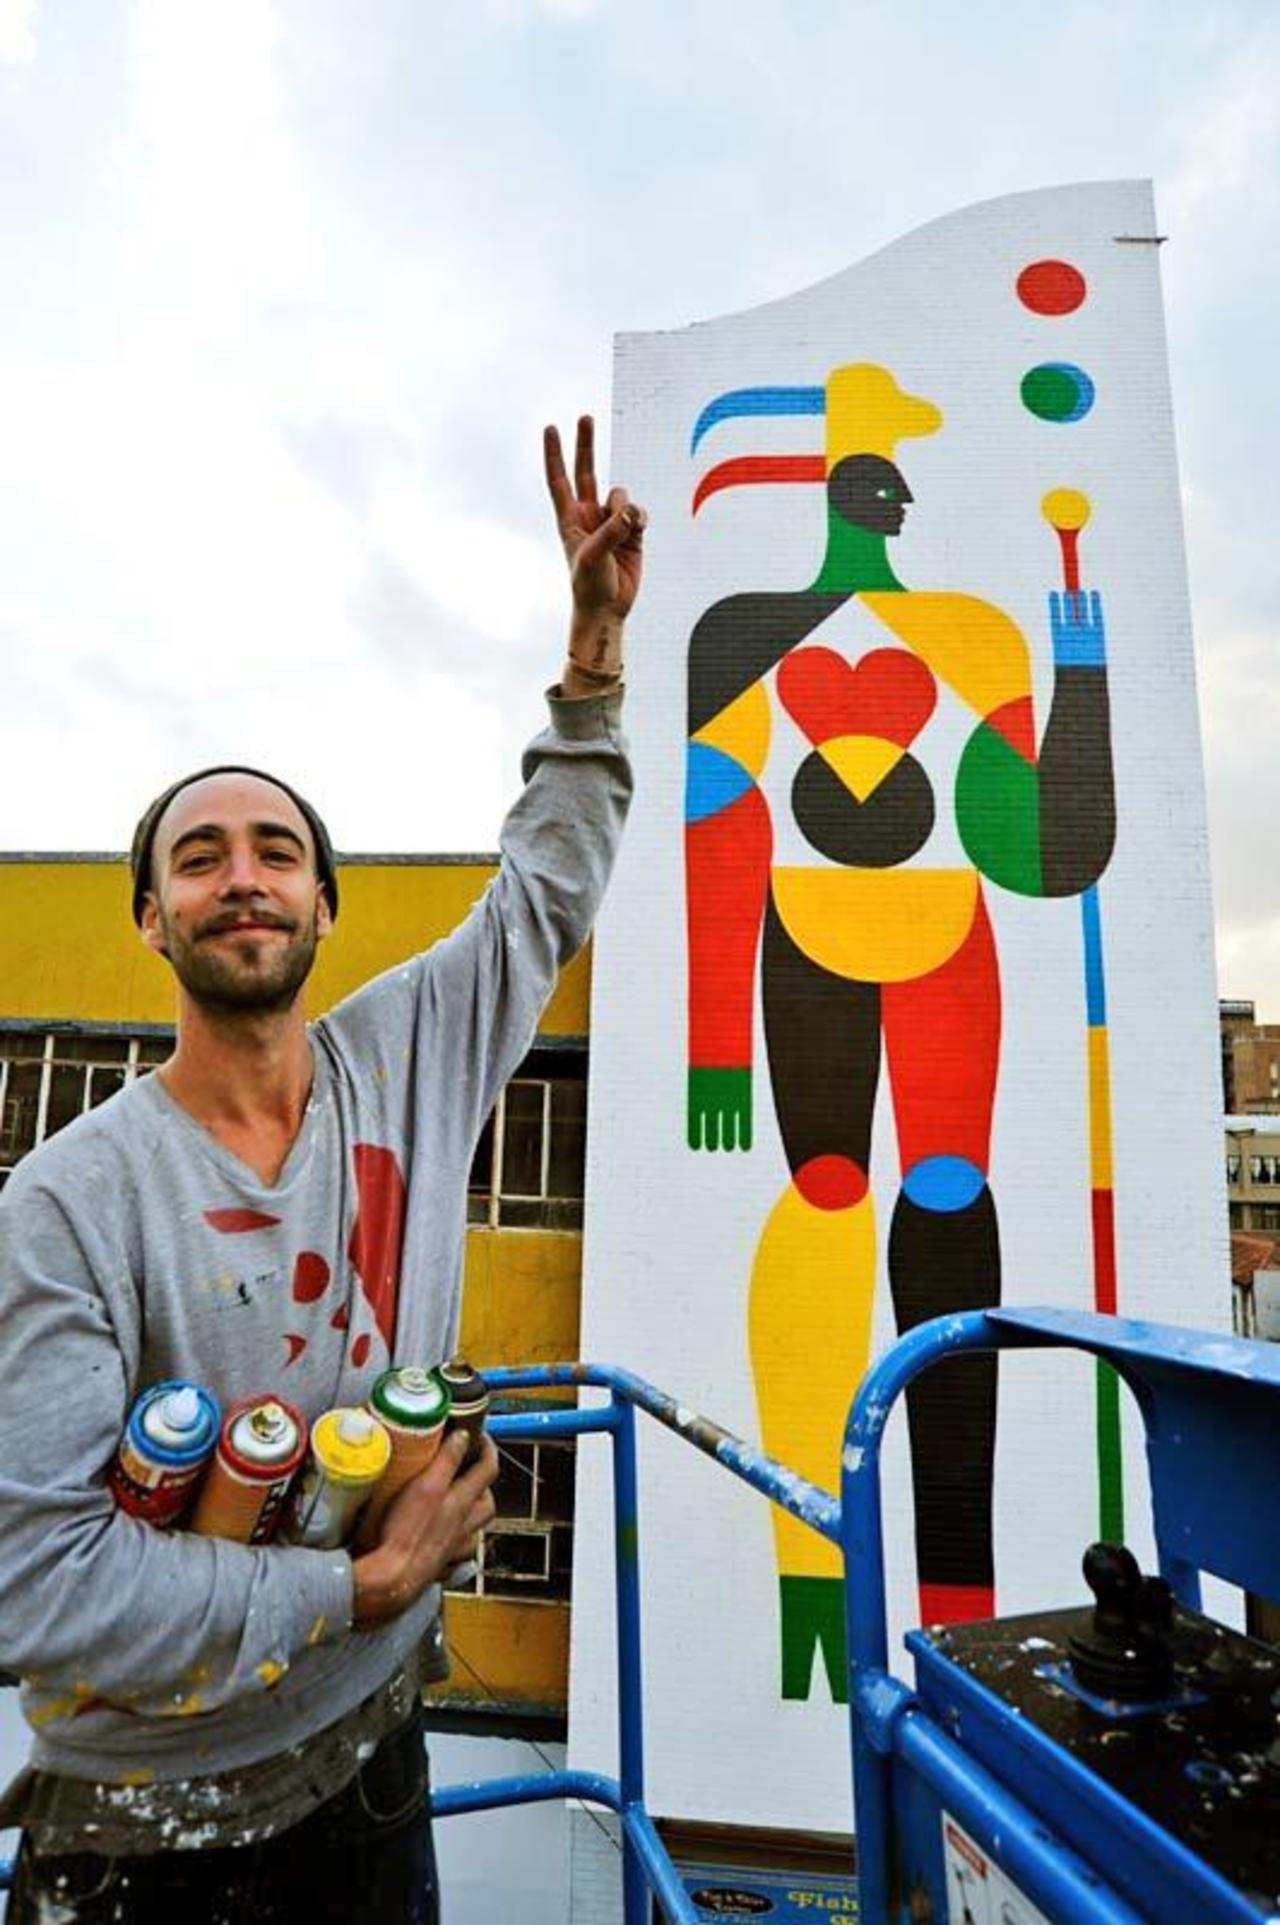 Remed 
South Africa 
#streetart #art #graffiti #mural http://t.co/4EBfJma0Xt